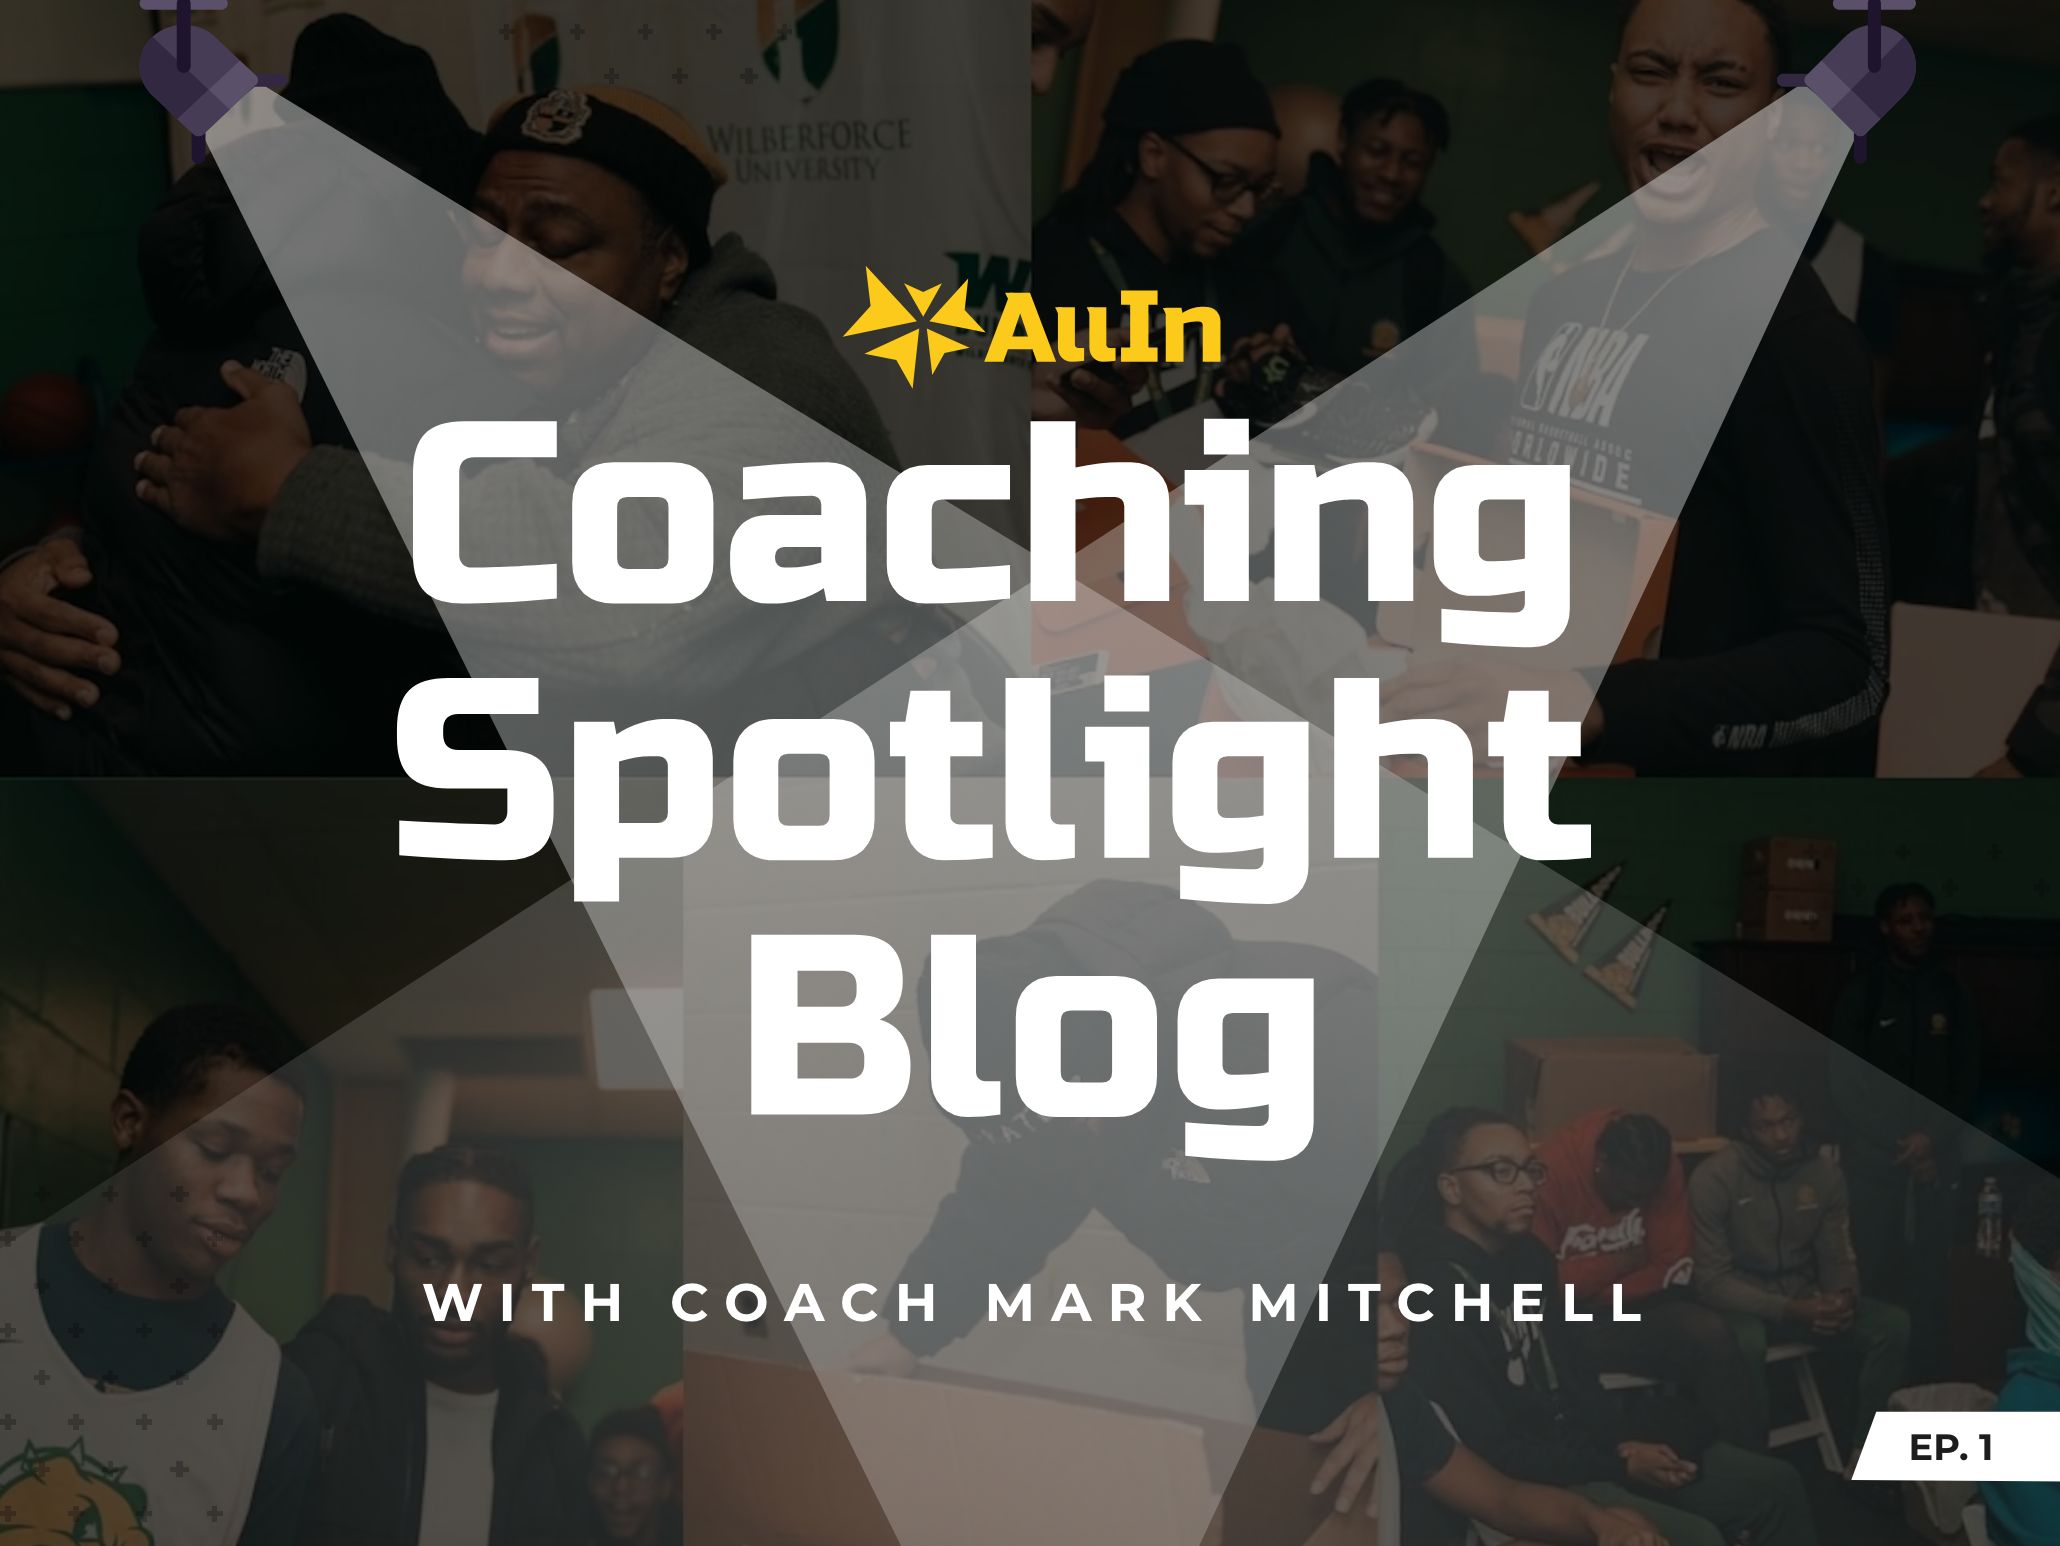 Coach Mark Mitchell building team culture